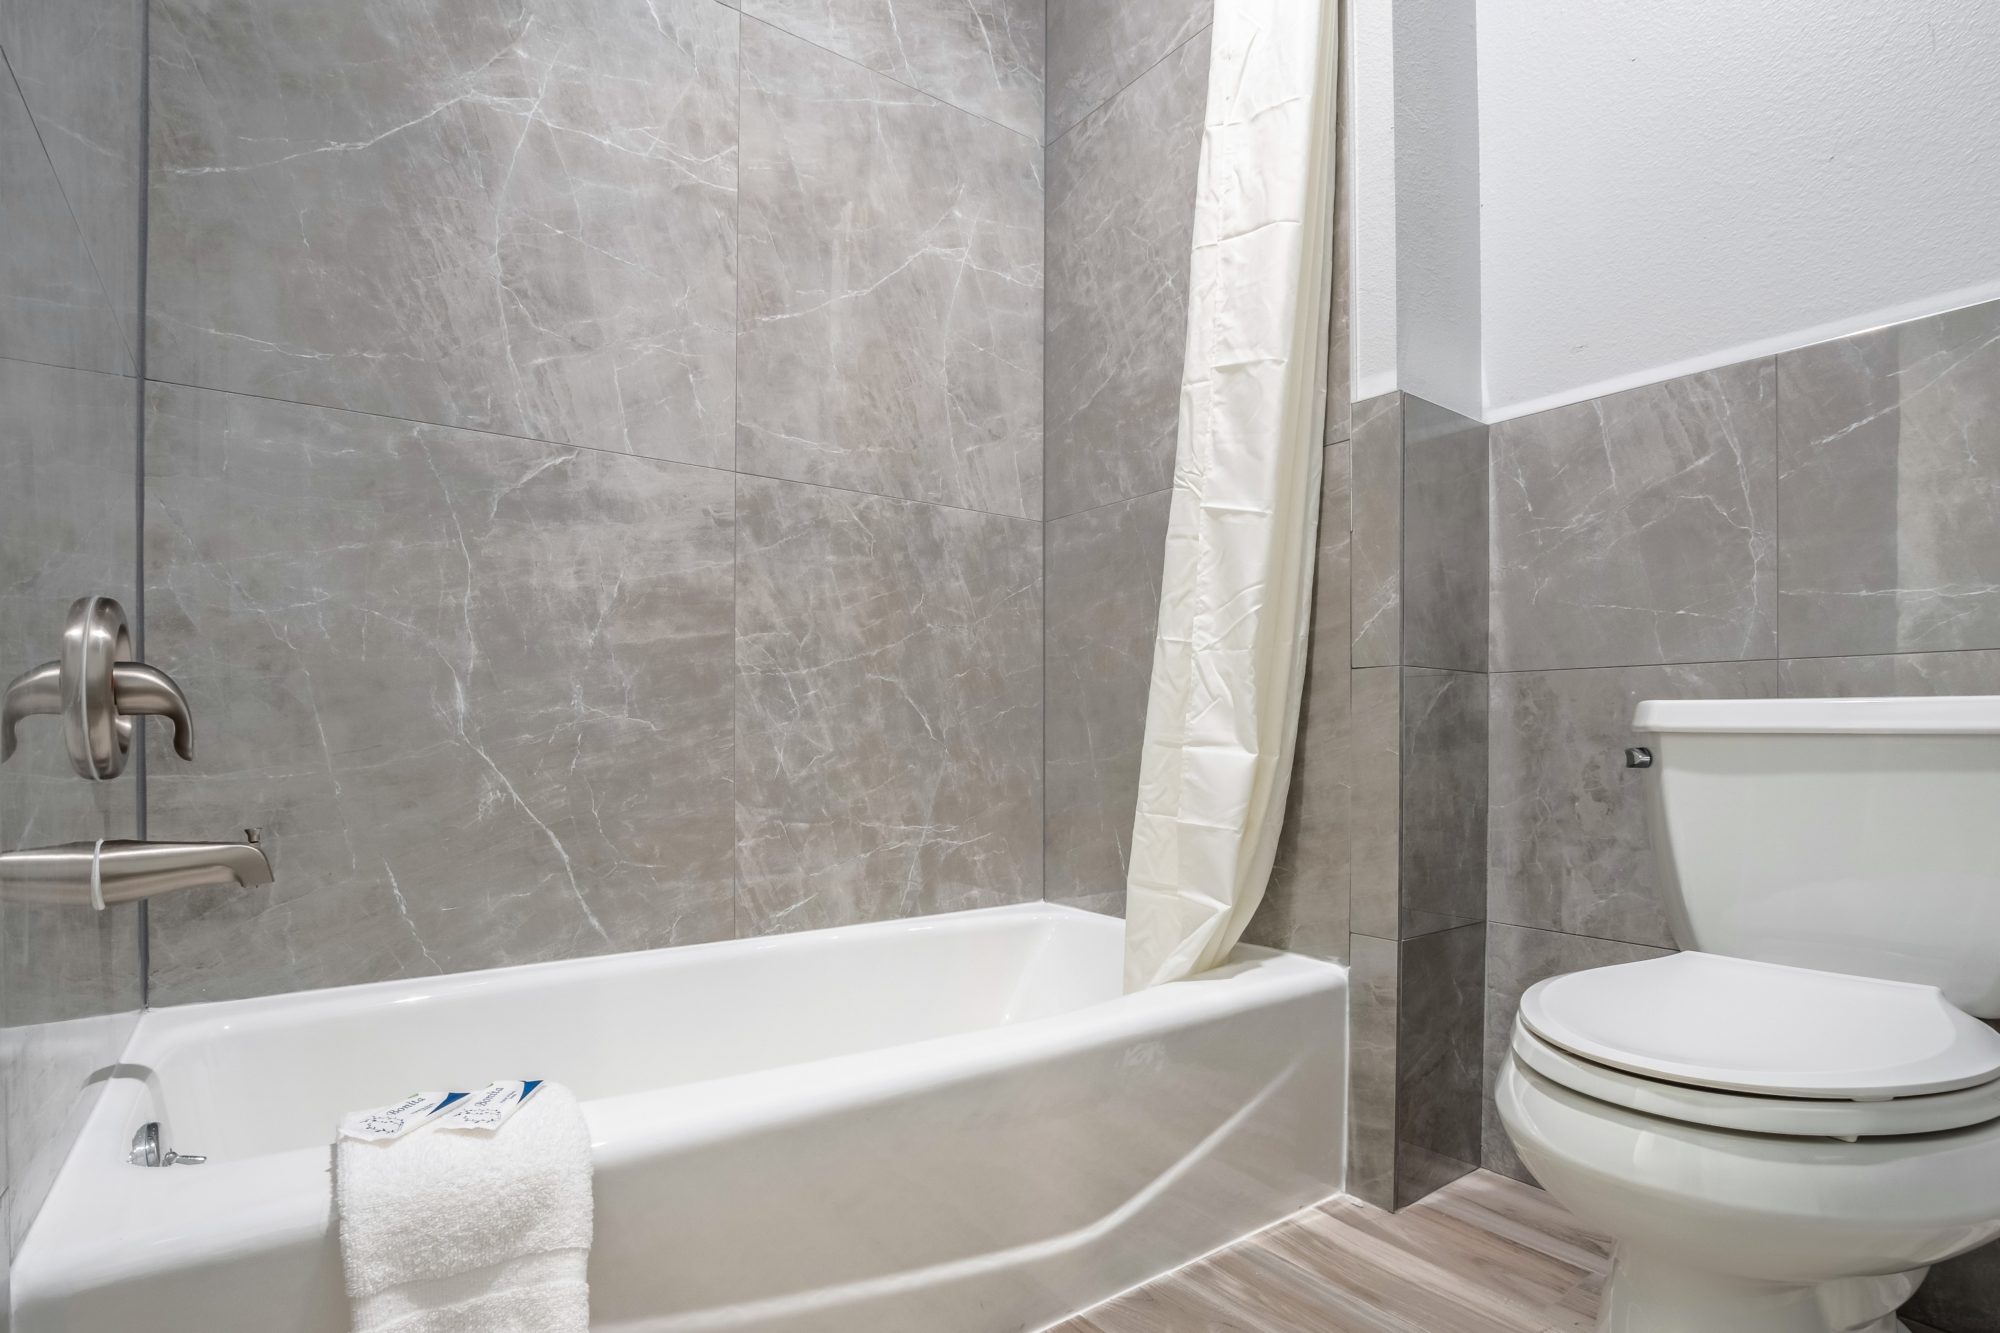 Shower tub with shower curtain, bathmat with bathroom amenities, toilet, laminated flooring